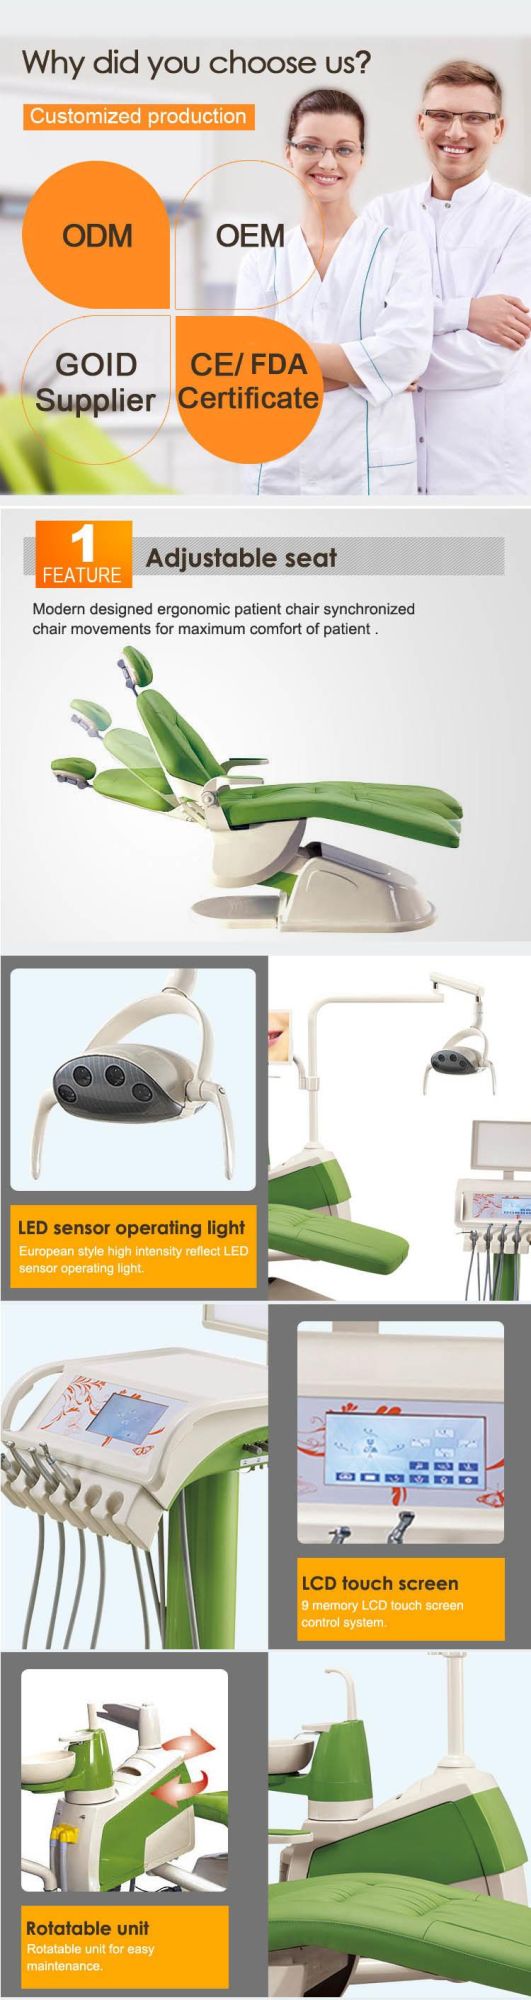 Leather Cushion FDA Approved Dental Chair Proma Dental Equipment/Medical Dental Supplies/Dental Chair Wikipedia